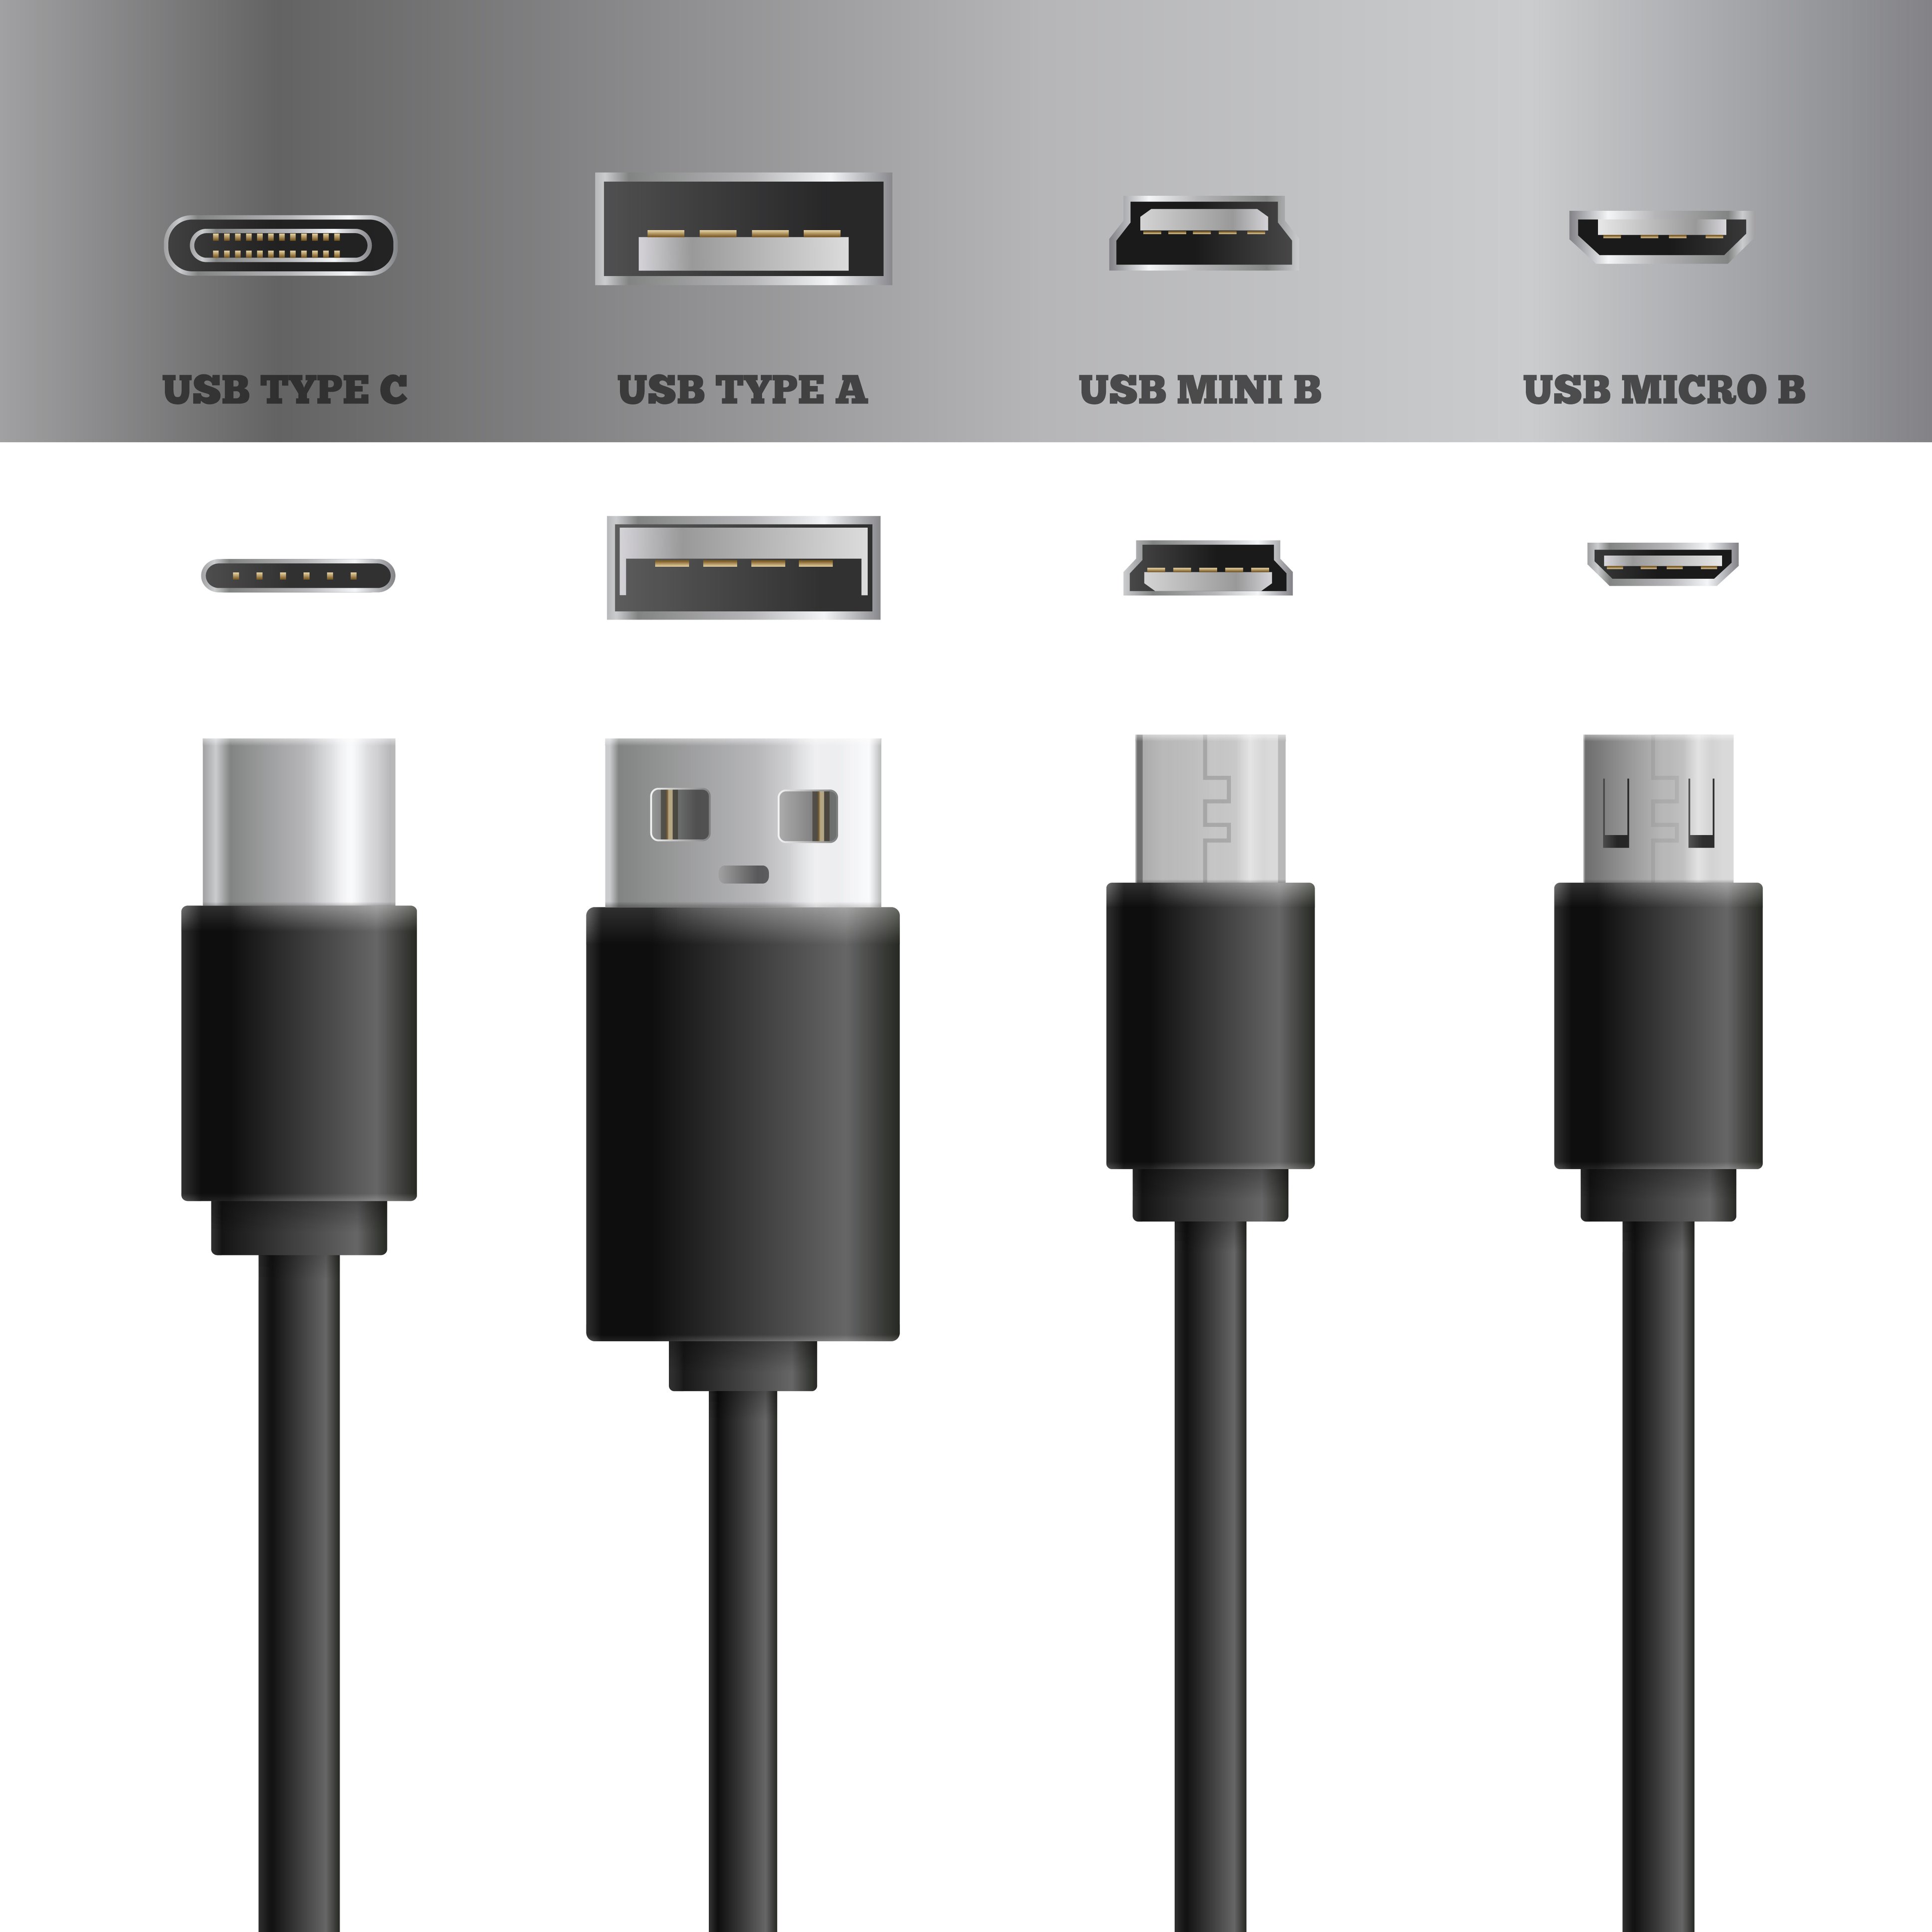 Figure 1. USB type A, USB mini and USB micro connectors. Source: macrovector/Adobe